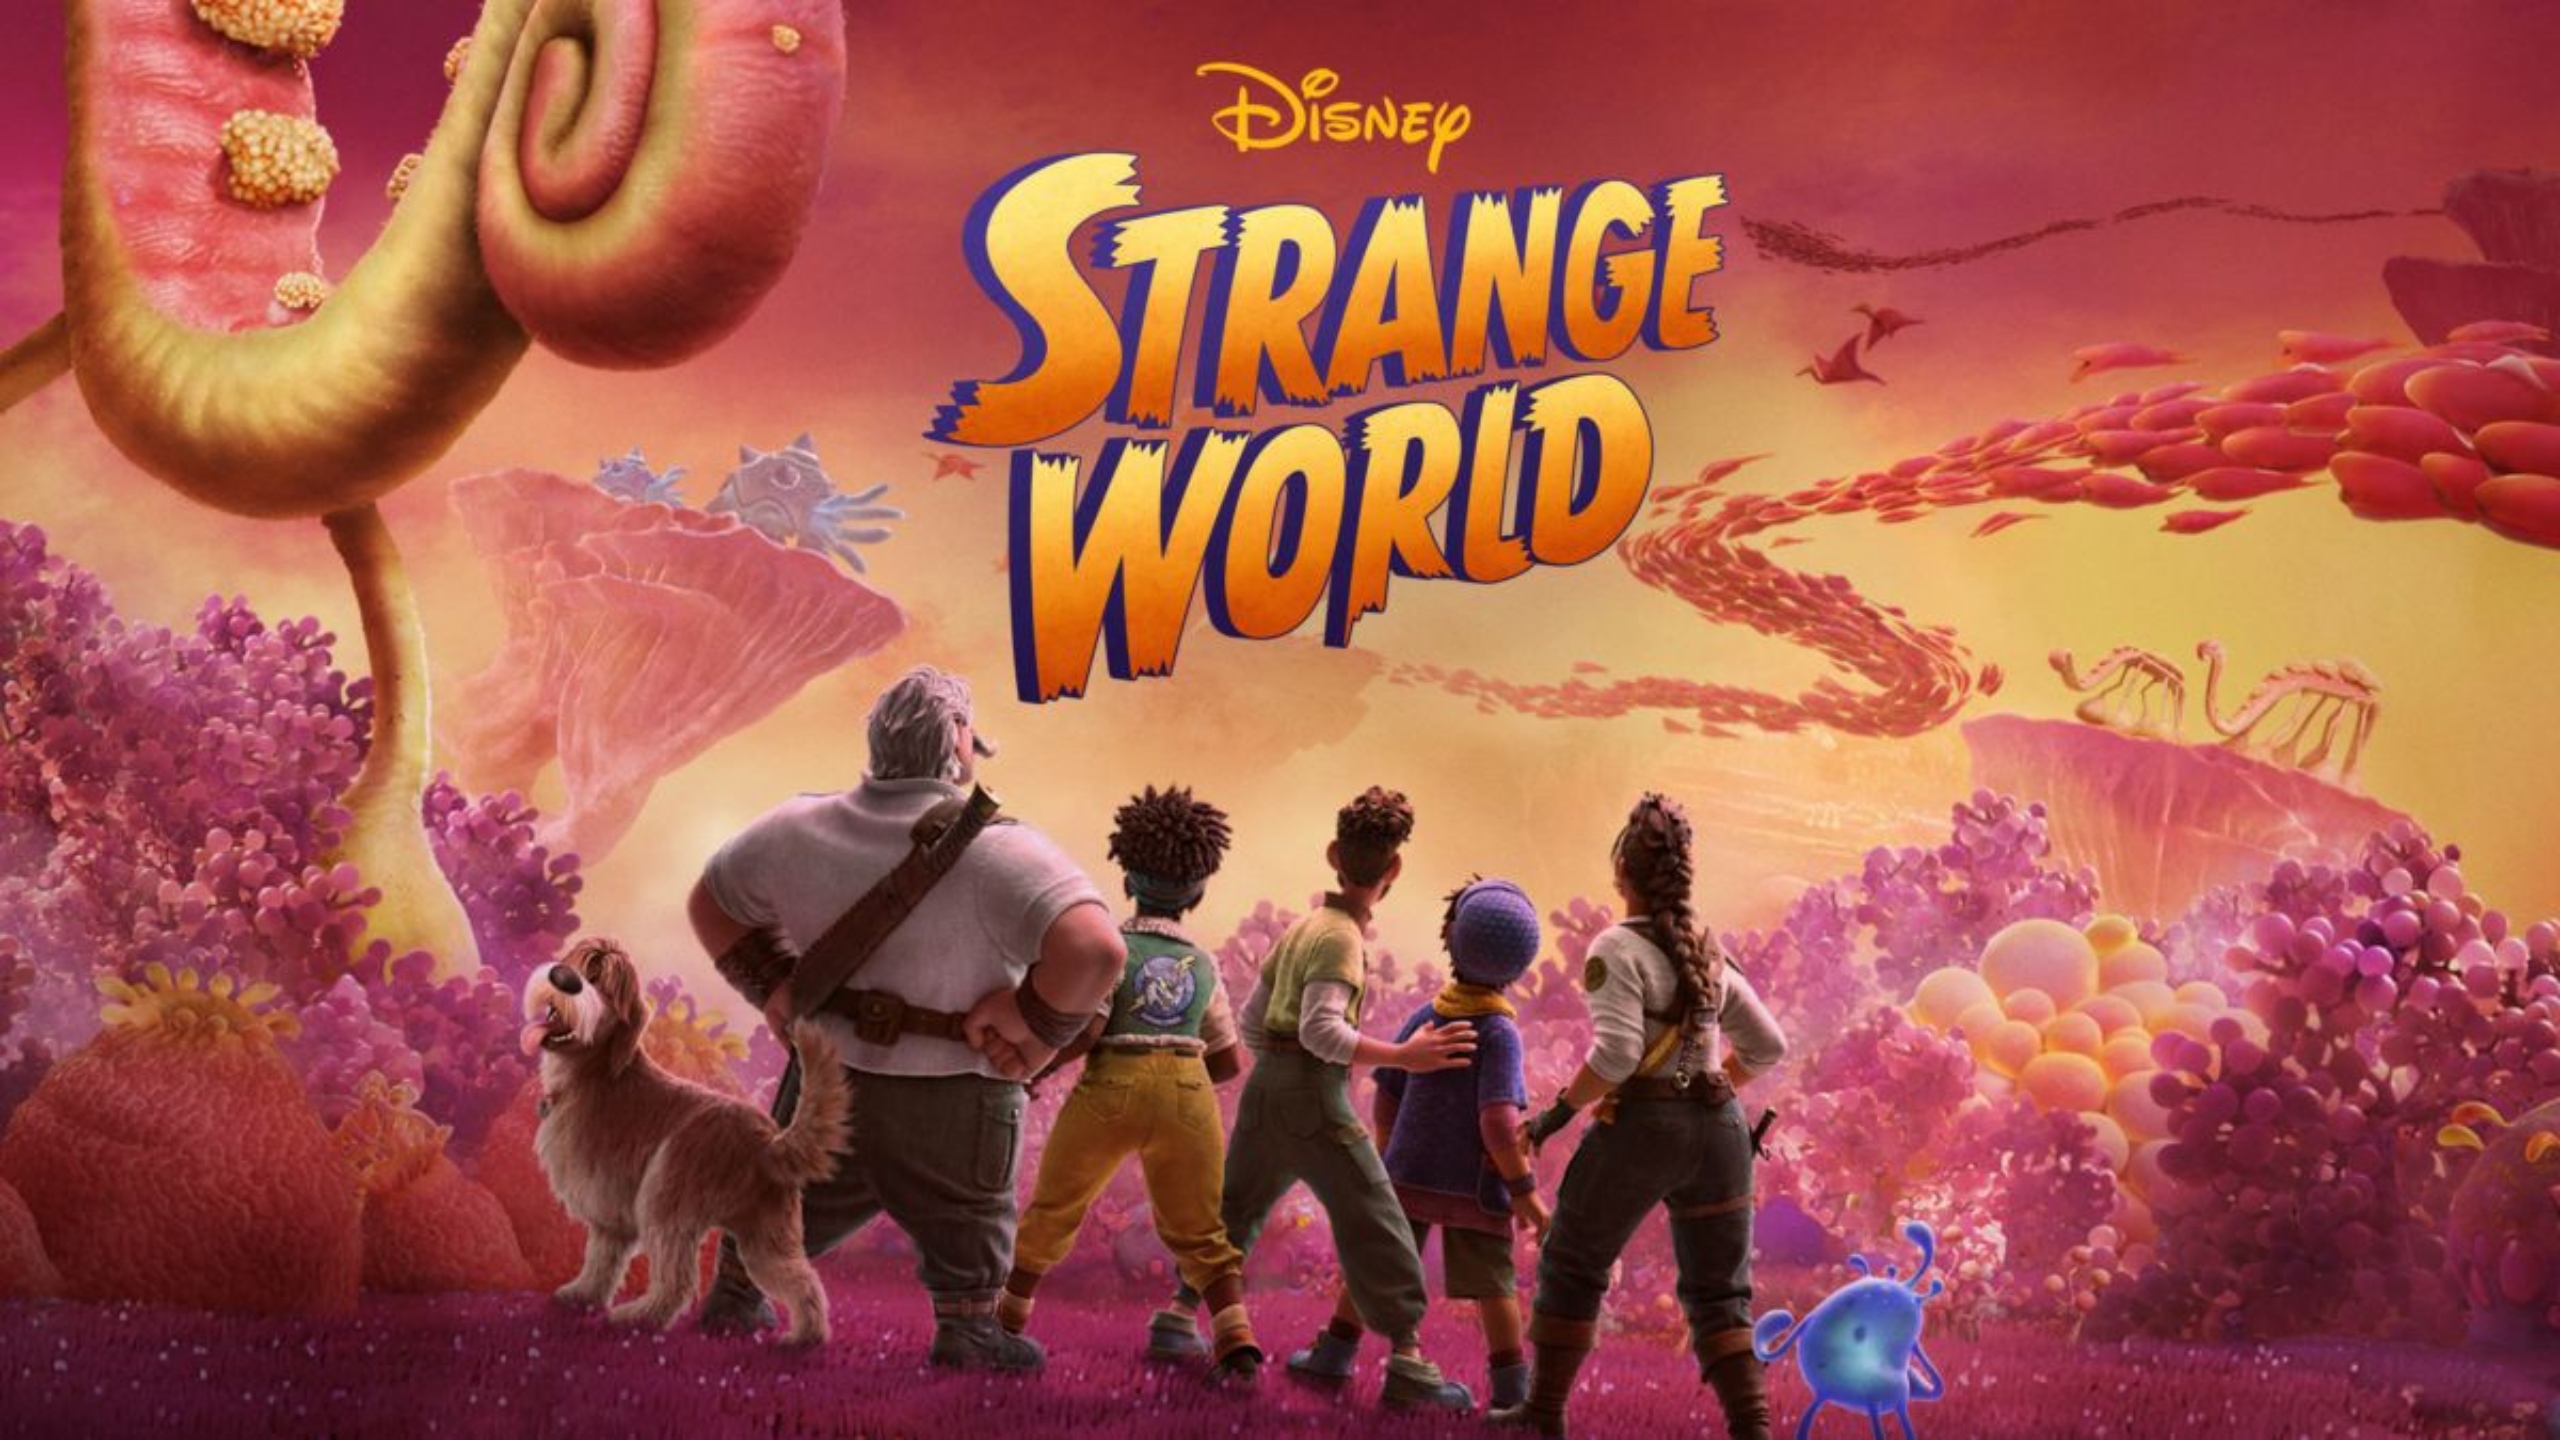 Disney’s Strange World is making its way to Disney+ on December 23rd